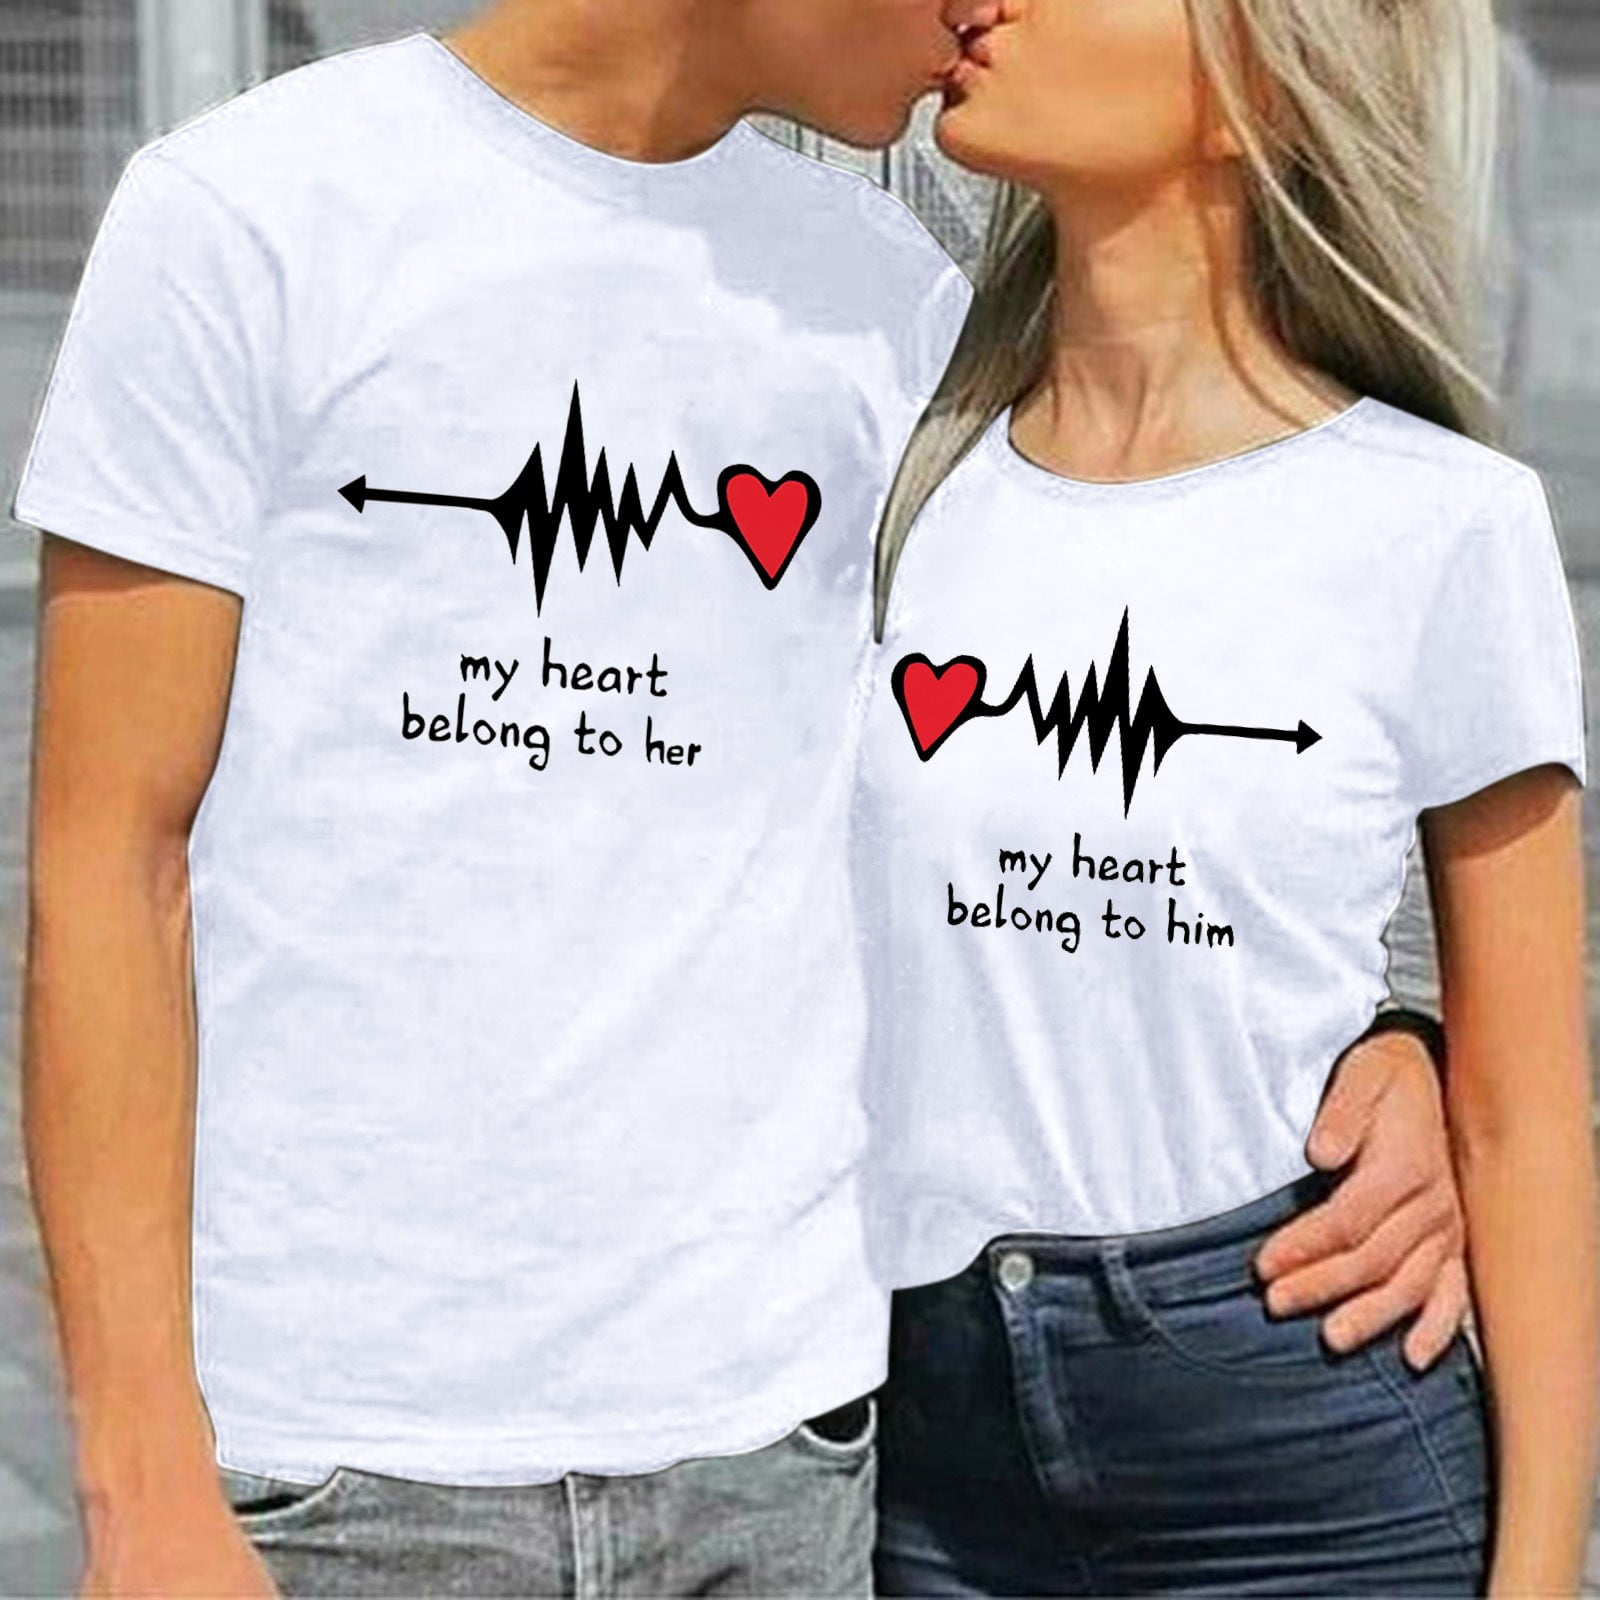 T-Shirts Couple T Shirt Cotton Tshirt Printing Machine Casual Design Tee  Custom Love Pattern Tshirts For Men